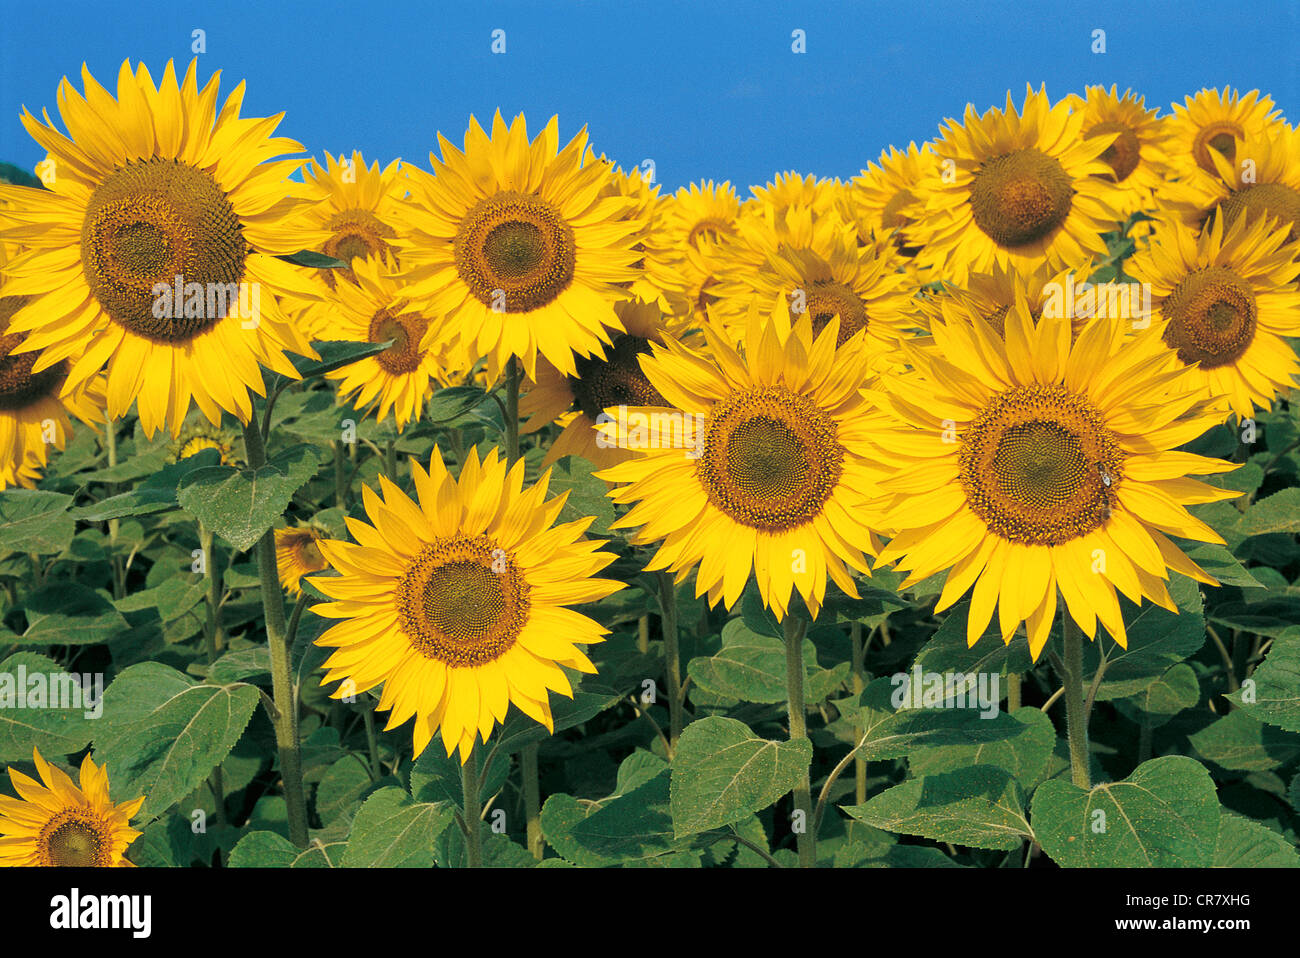 France, Tarn, sunflower, Helianthus annuus Stock Photo